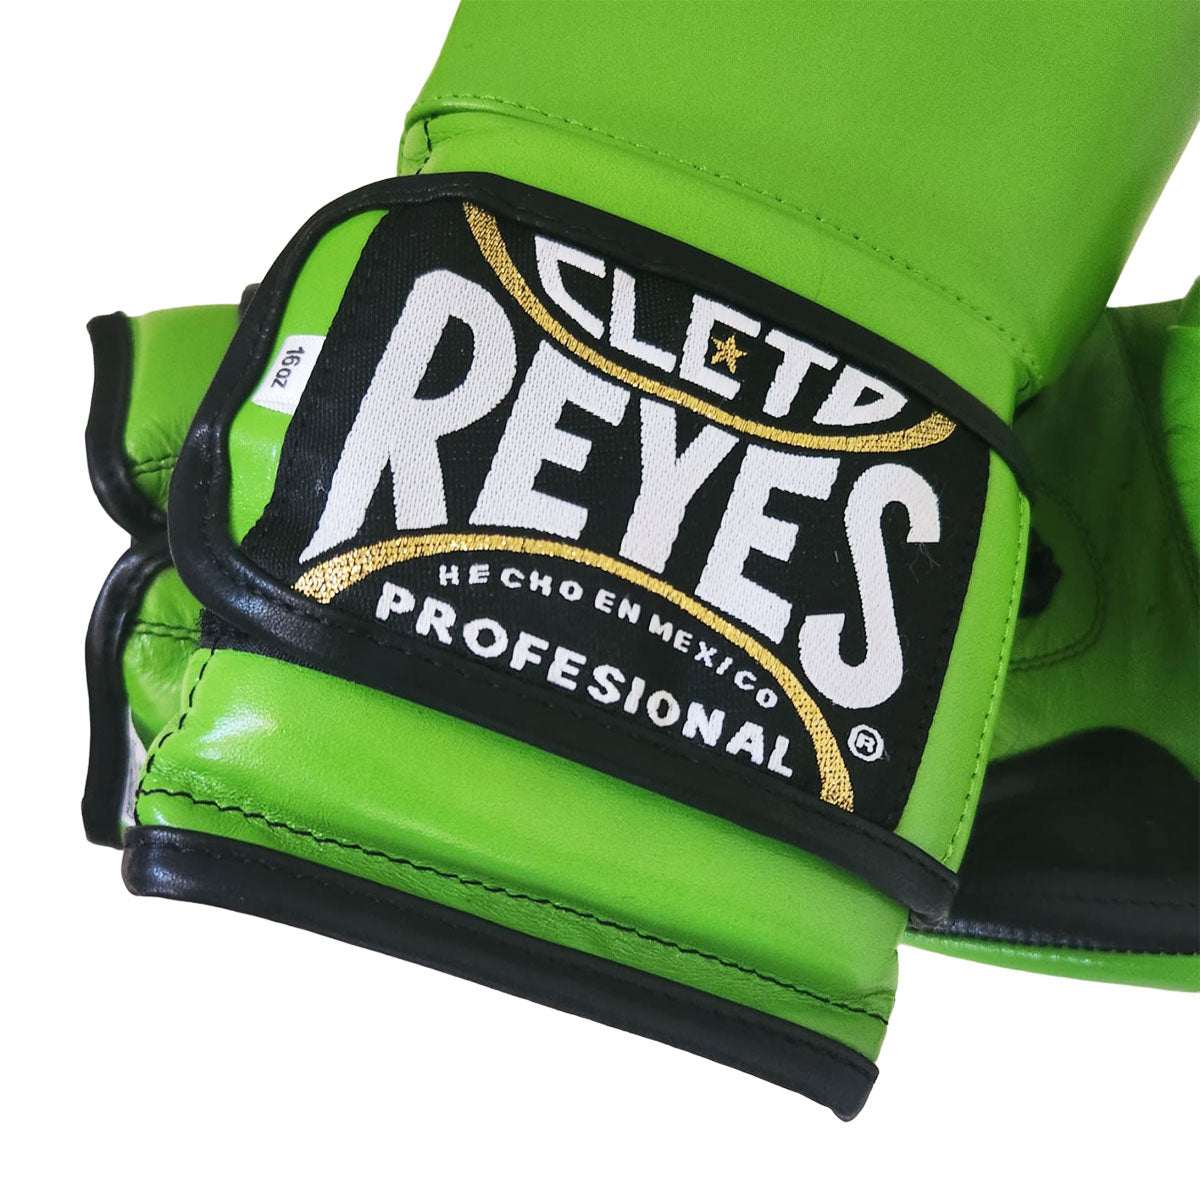 Boxing Gloves Cleto Reyes Hook Loop Closure Citrus Green (Free Shipping)